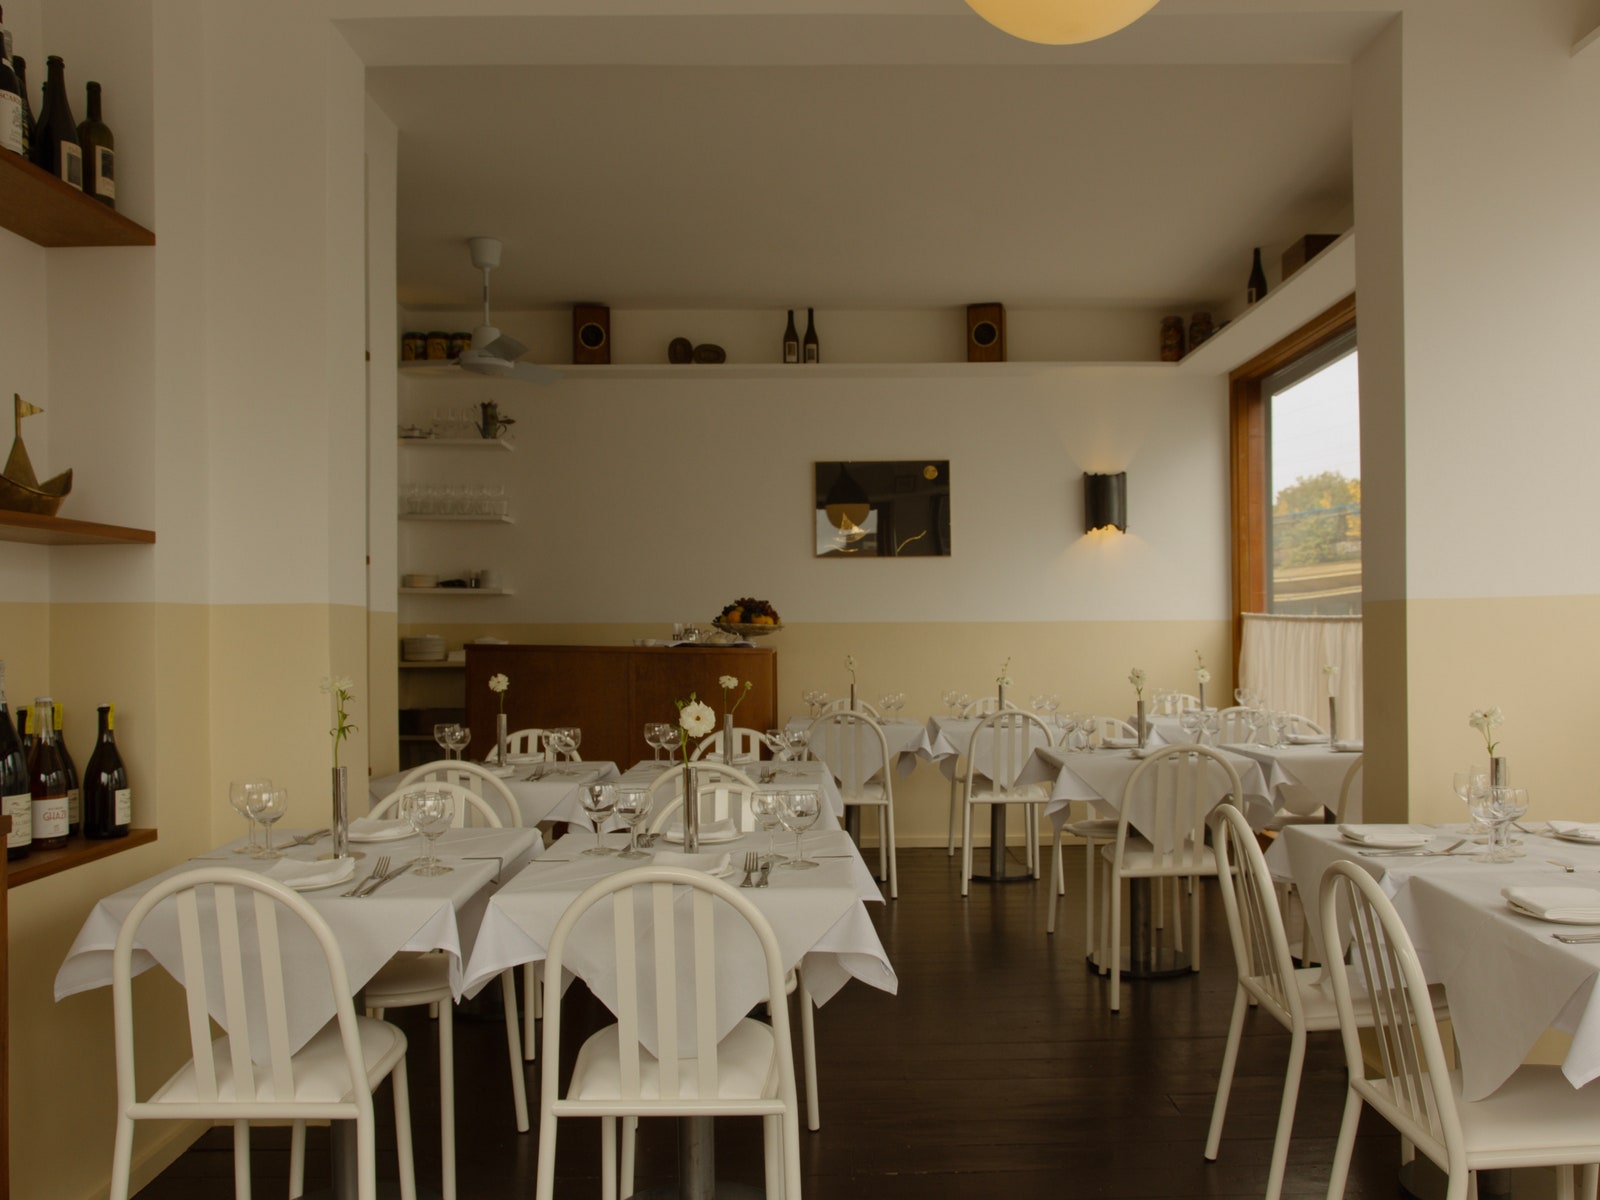 Dalla is Hackney’s latest postcard-perfect Italian restaurant